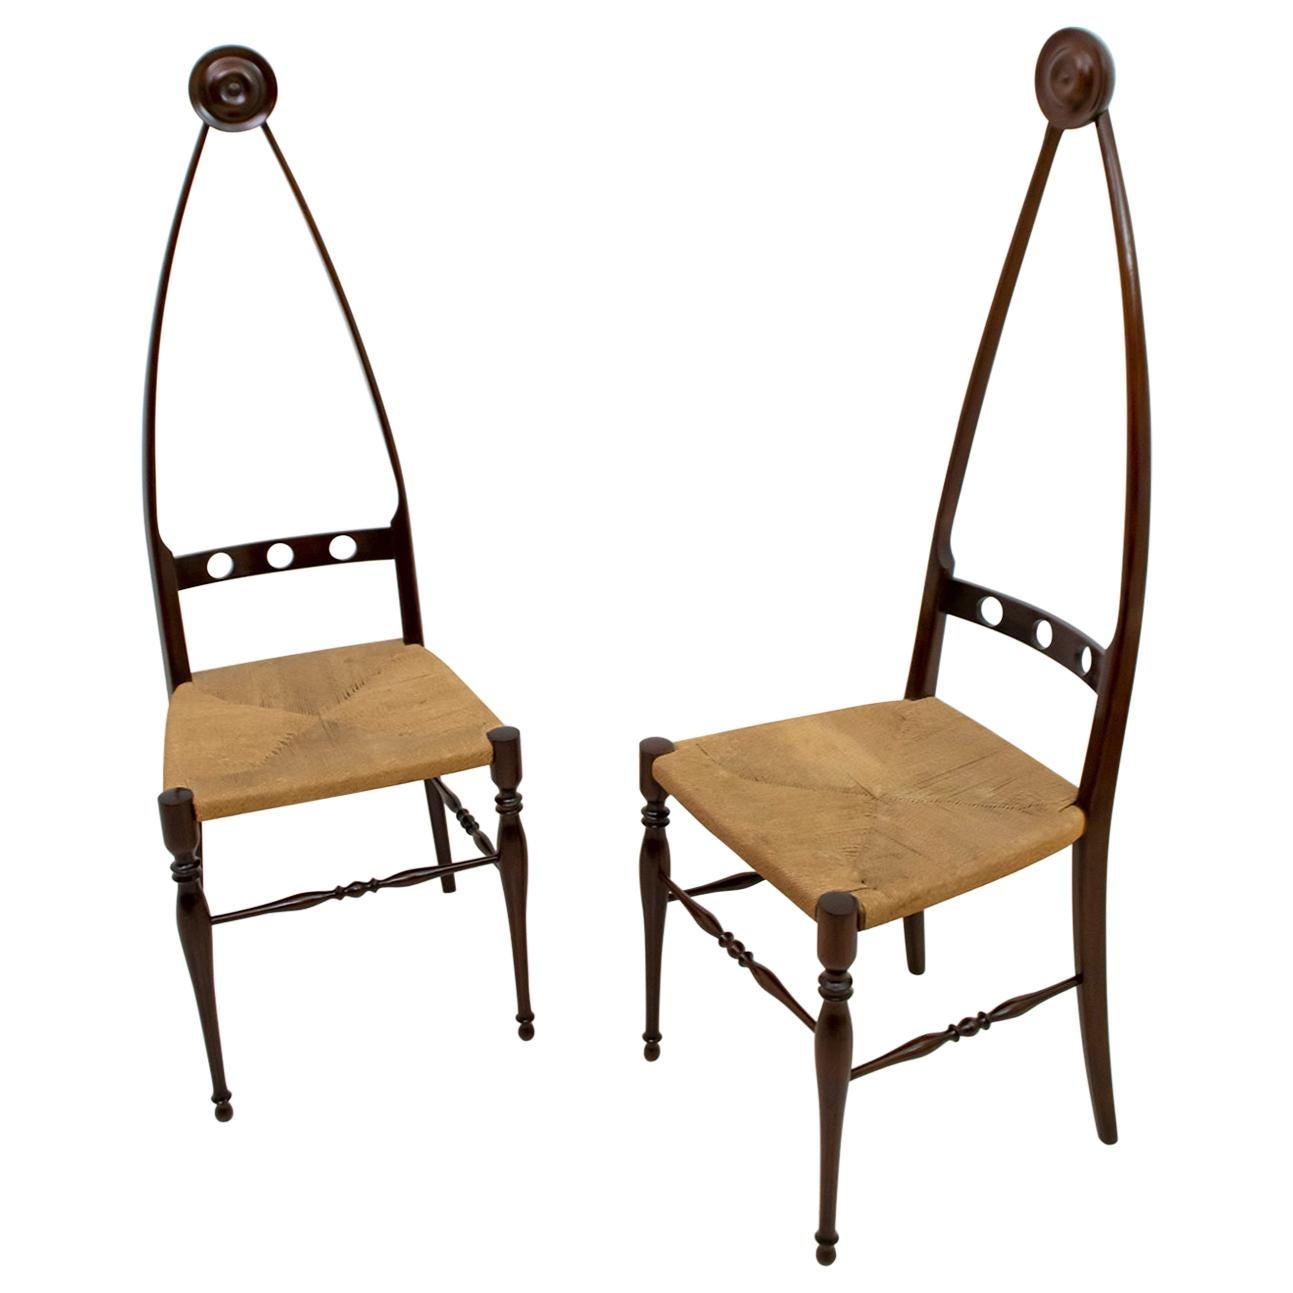 Pair of Pozzi & Verga Mid-Century Modern Italian High Back Chairs, 1950s